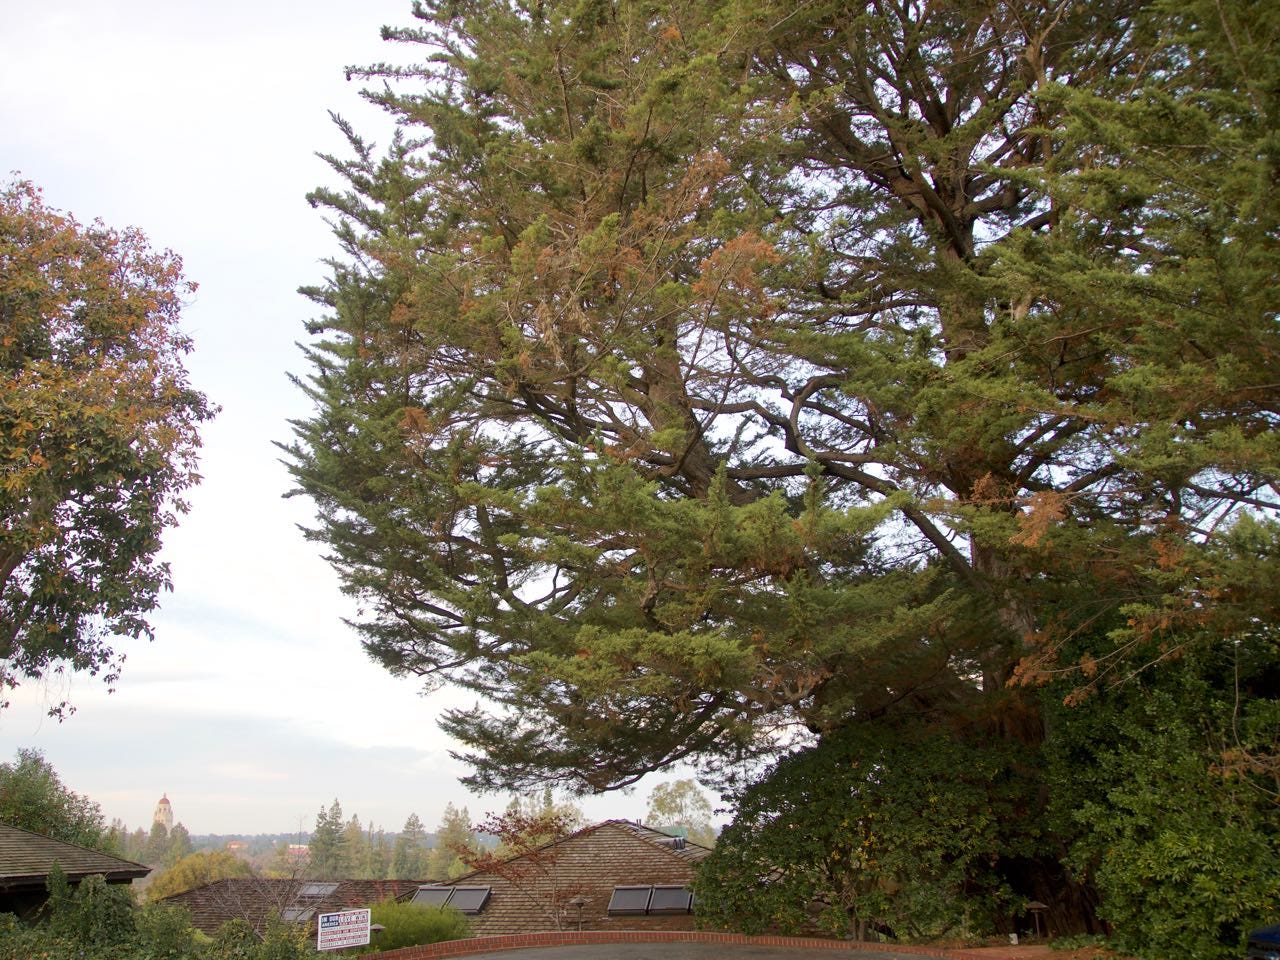 Monterey cypress overlooking Stanford's campus